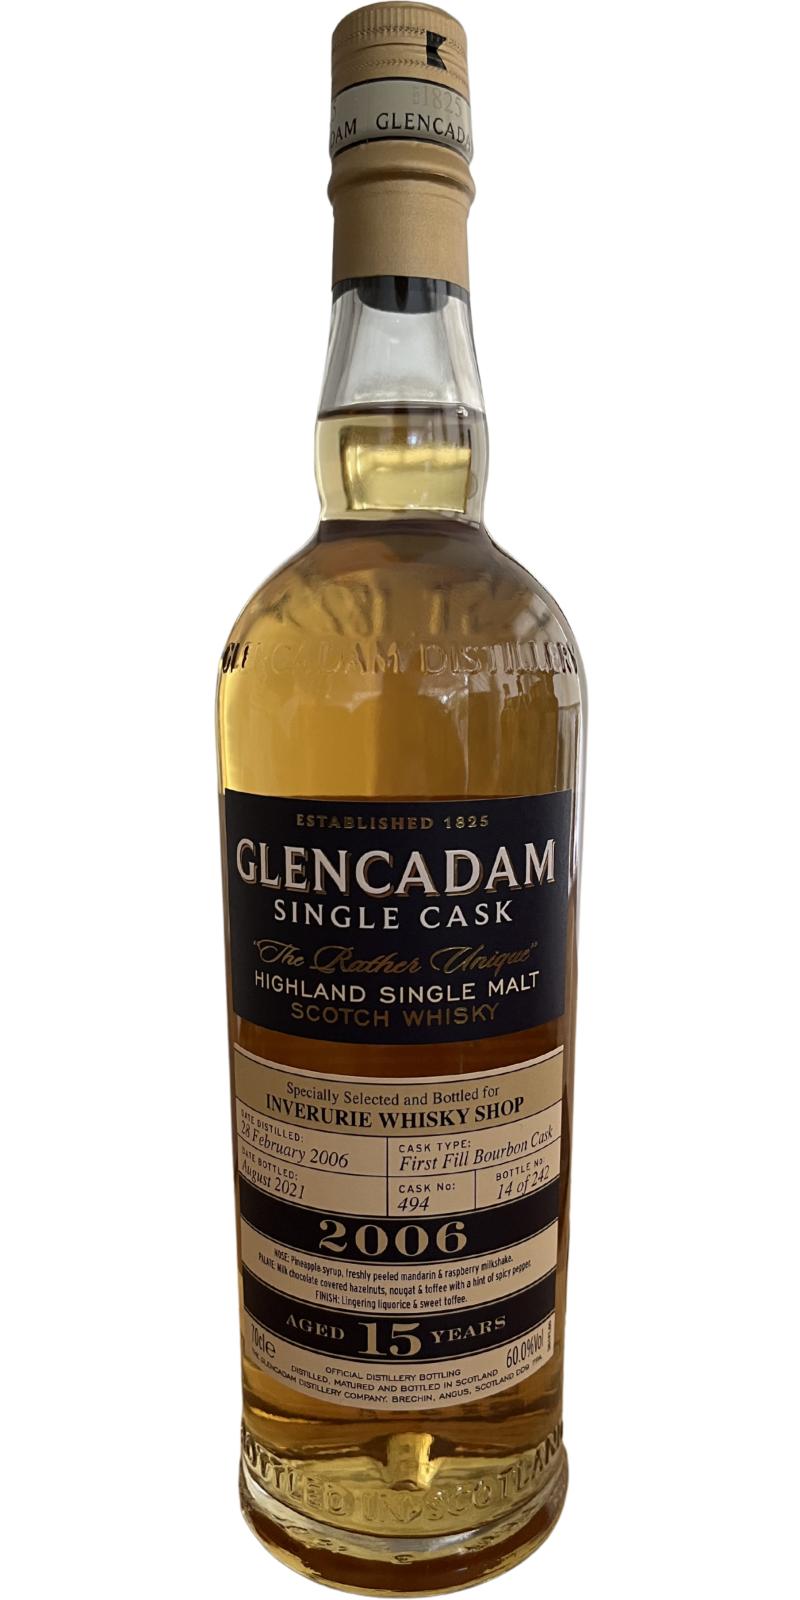 Glencadam 2006 First Fill Bourbon #494 Inverurie Whisky Shop Exclusive 60% 700ml